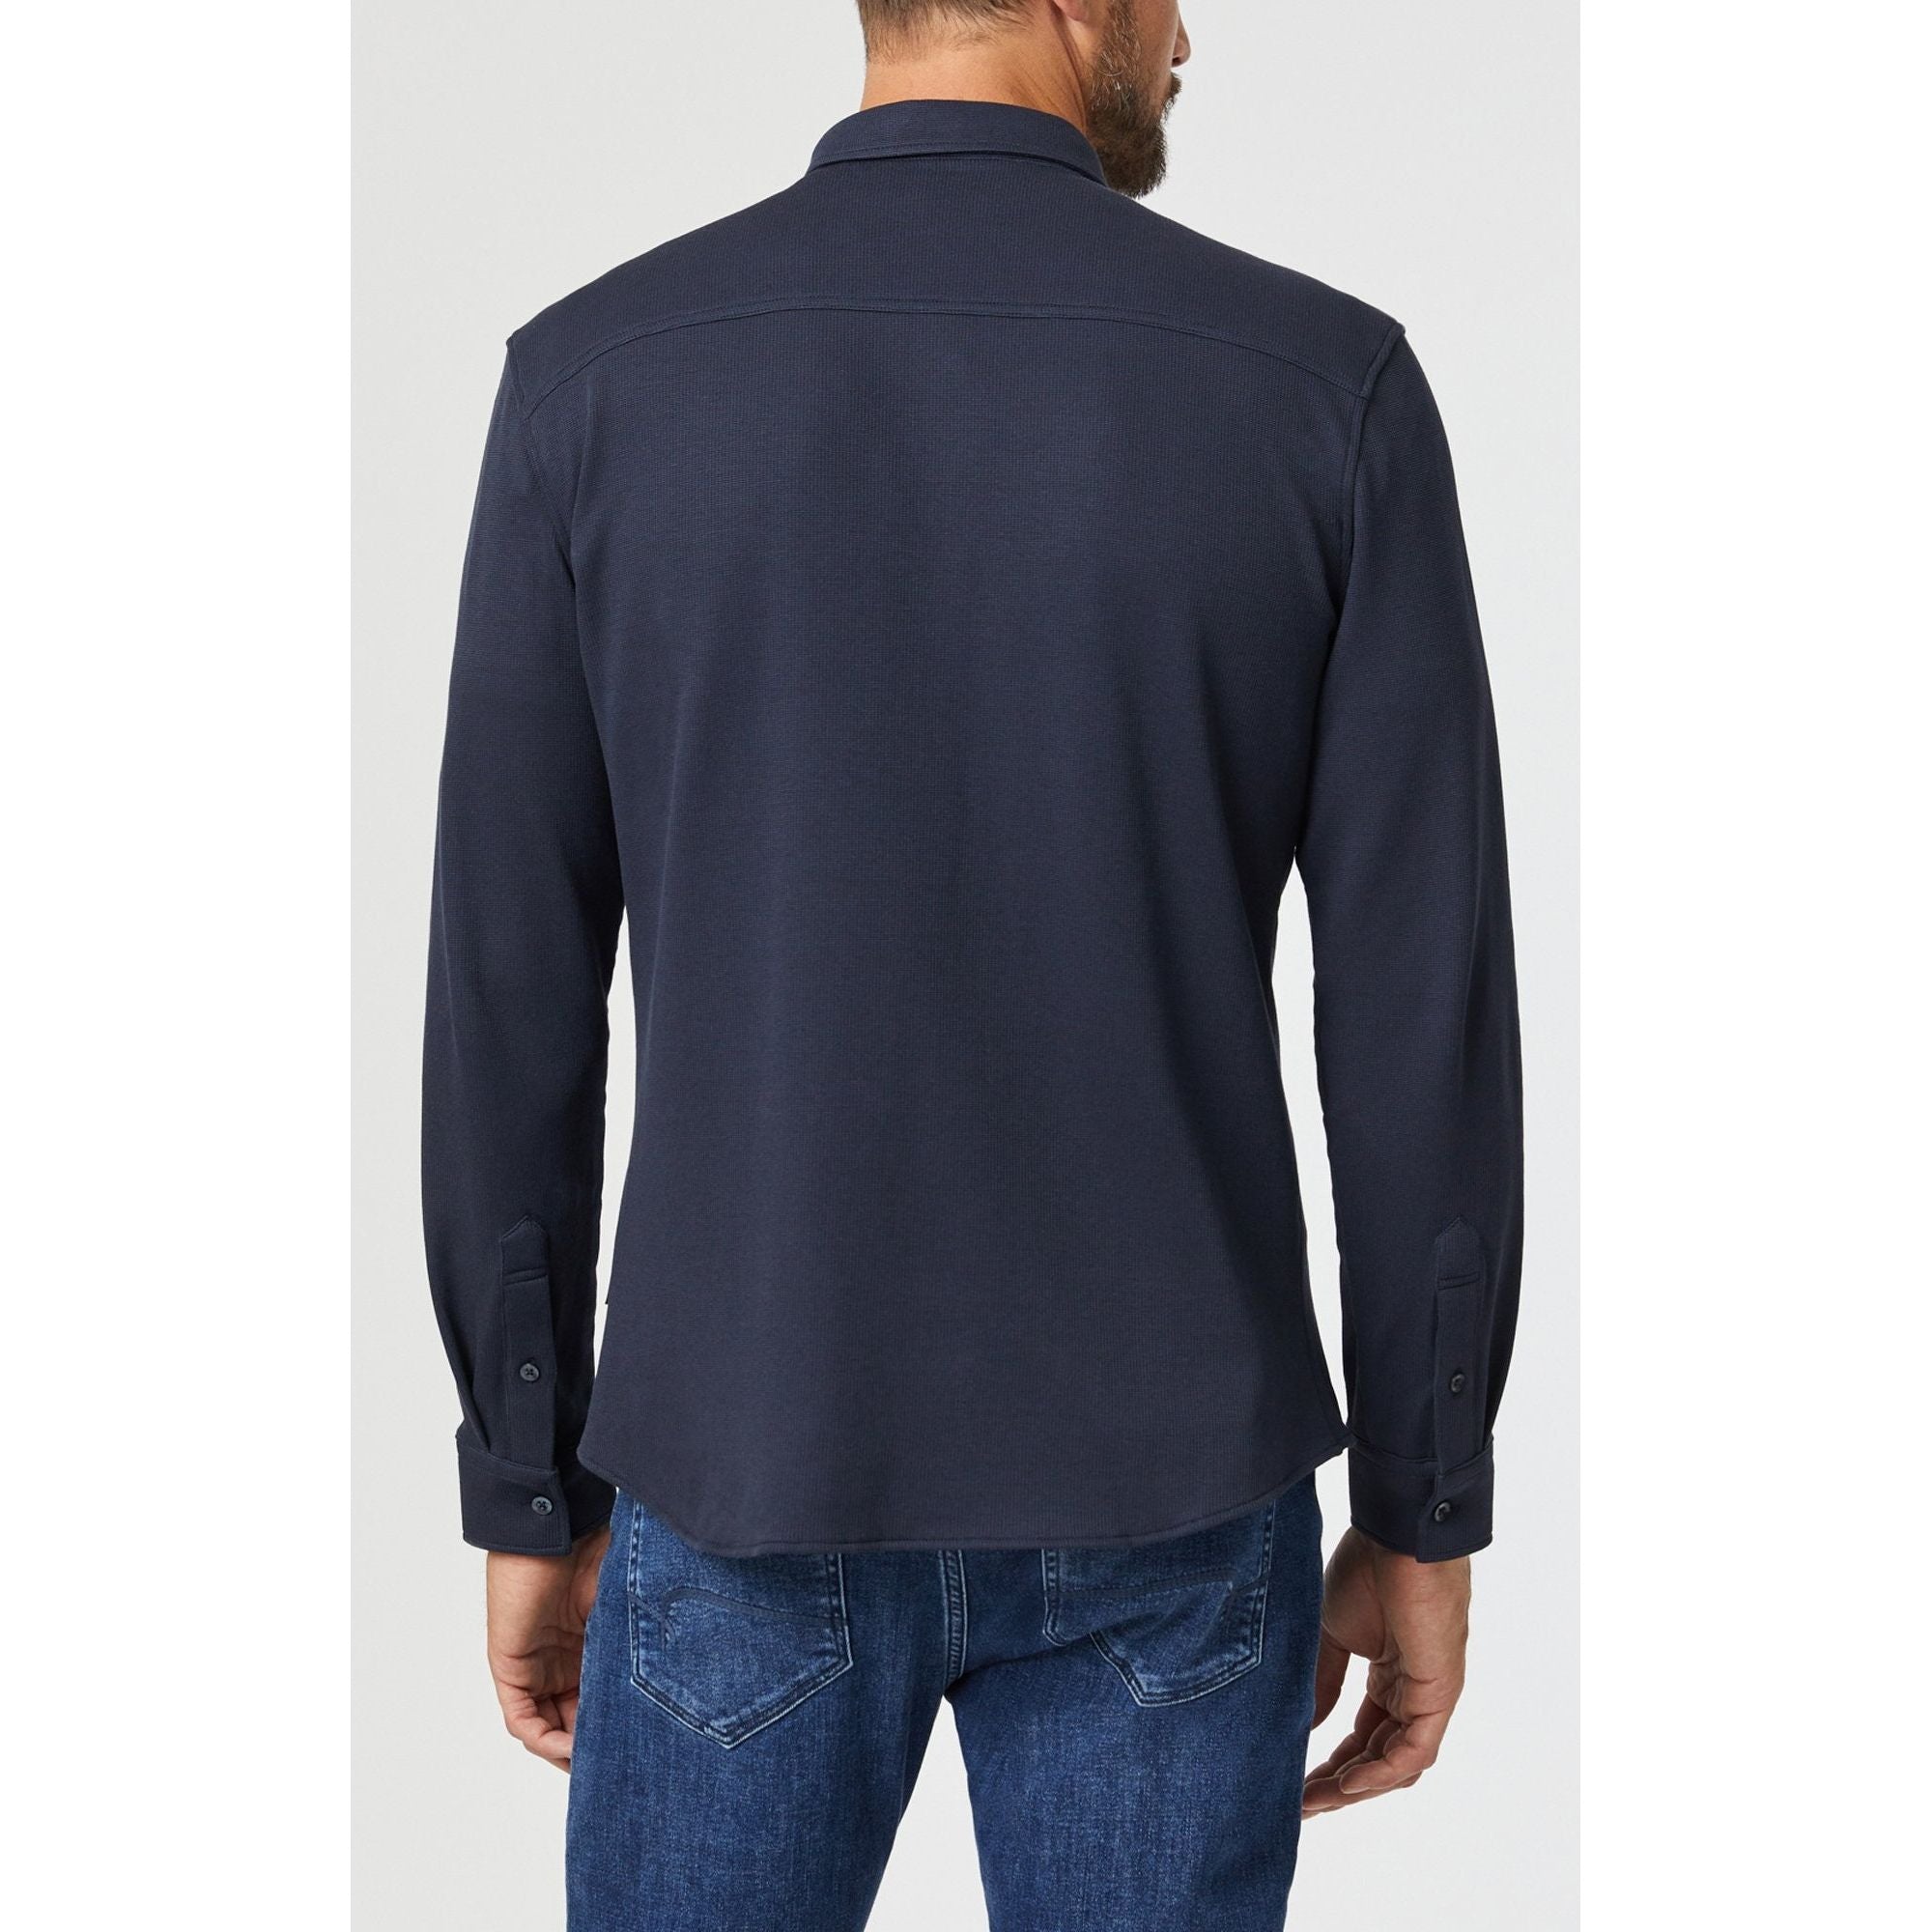 Mavi - Button Up Shirt in Mood Indigo-SQ2384258